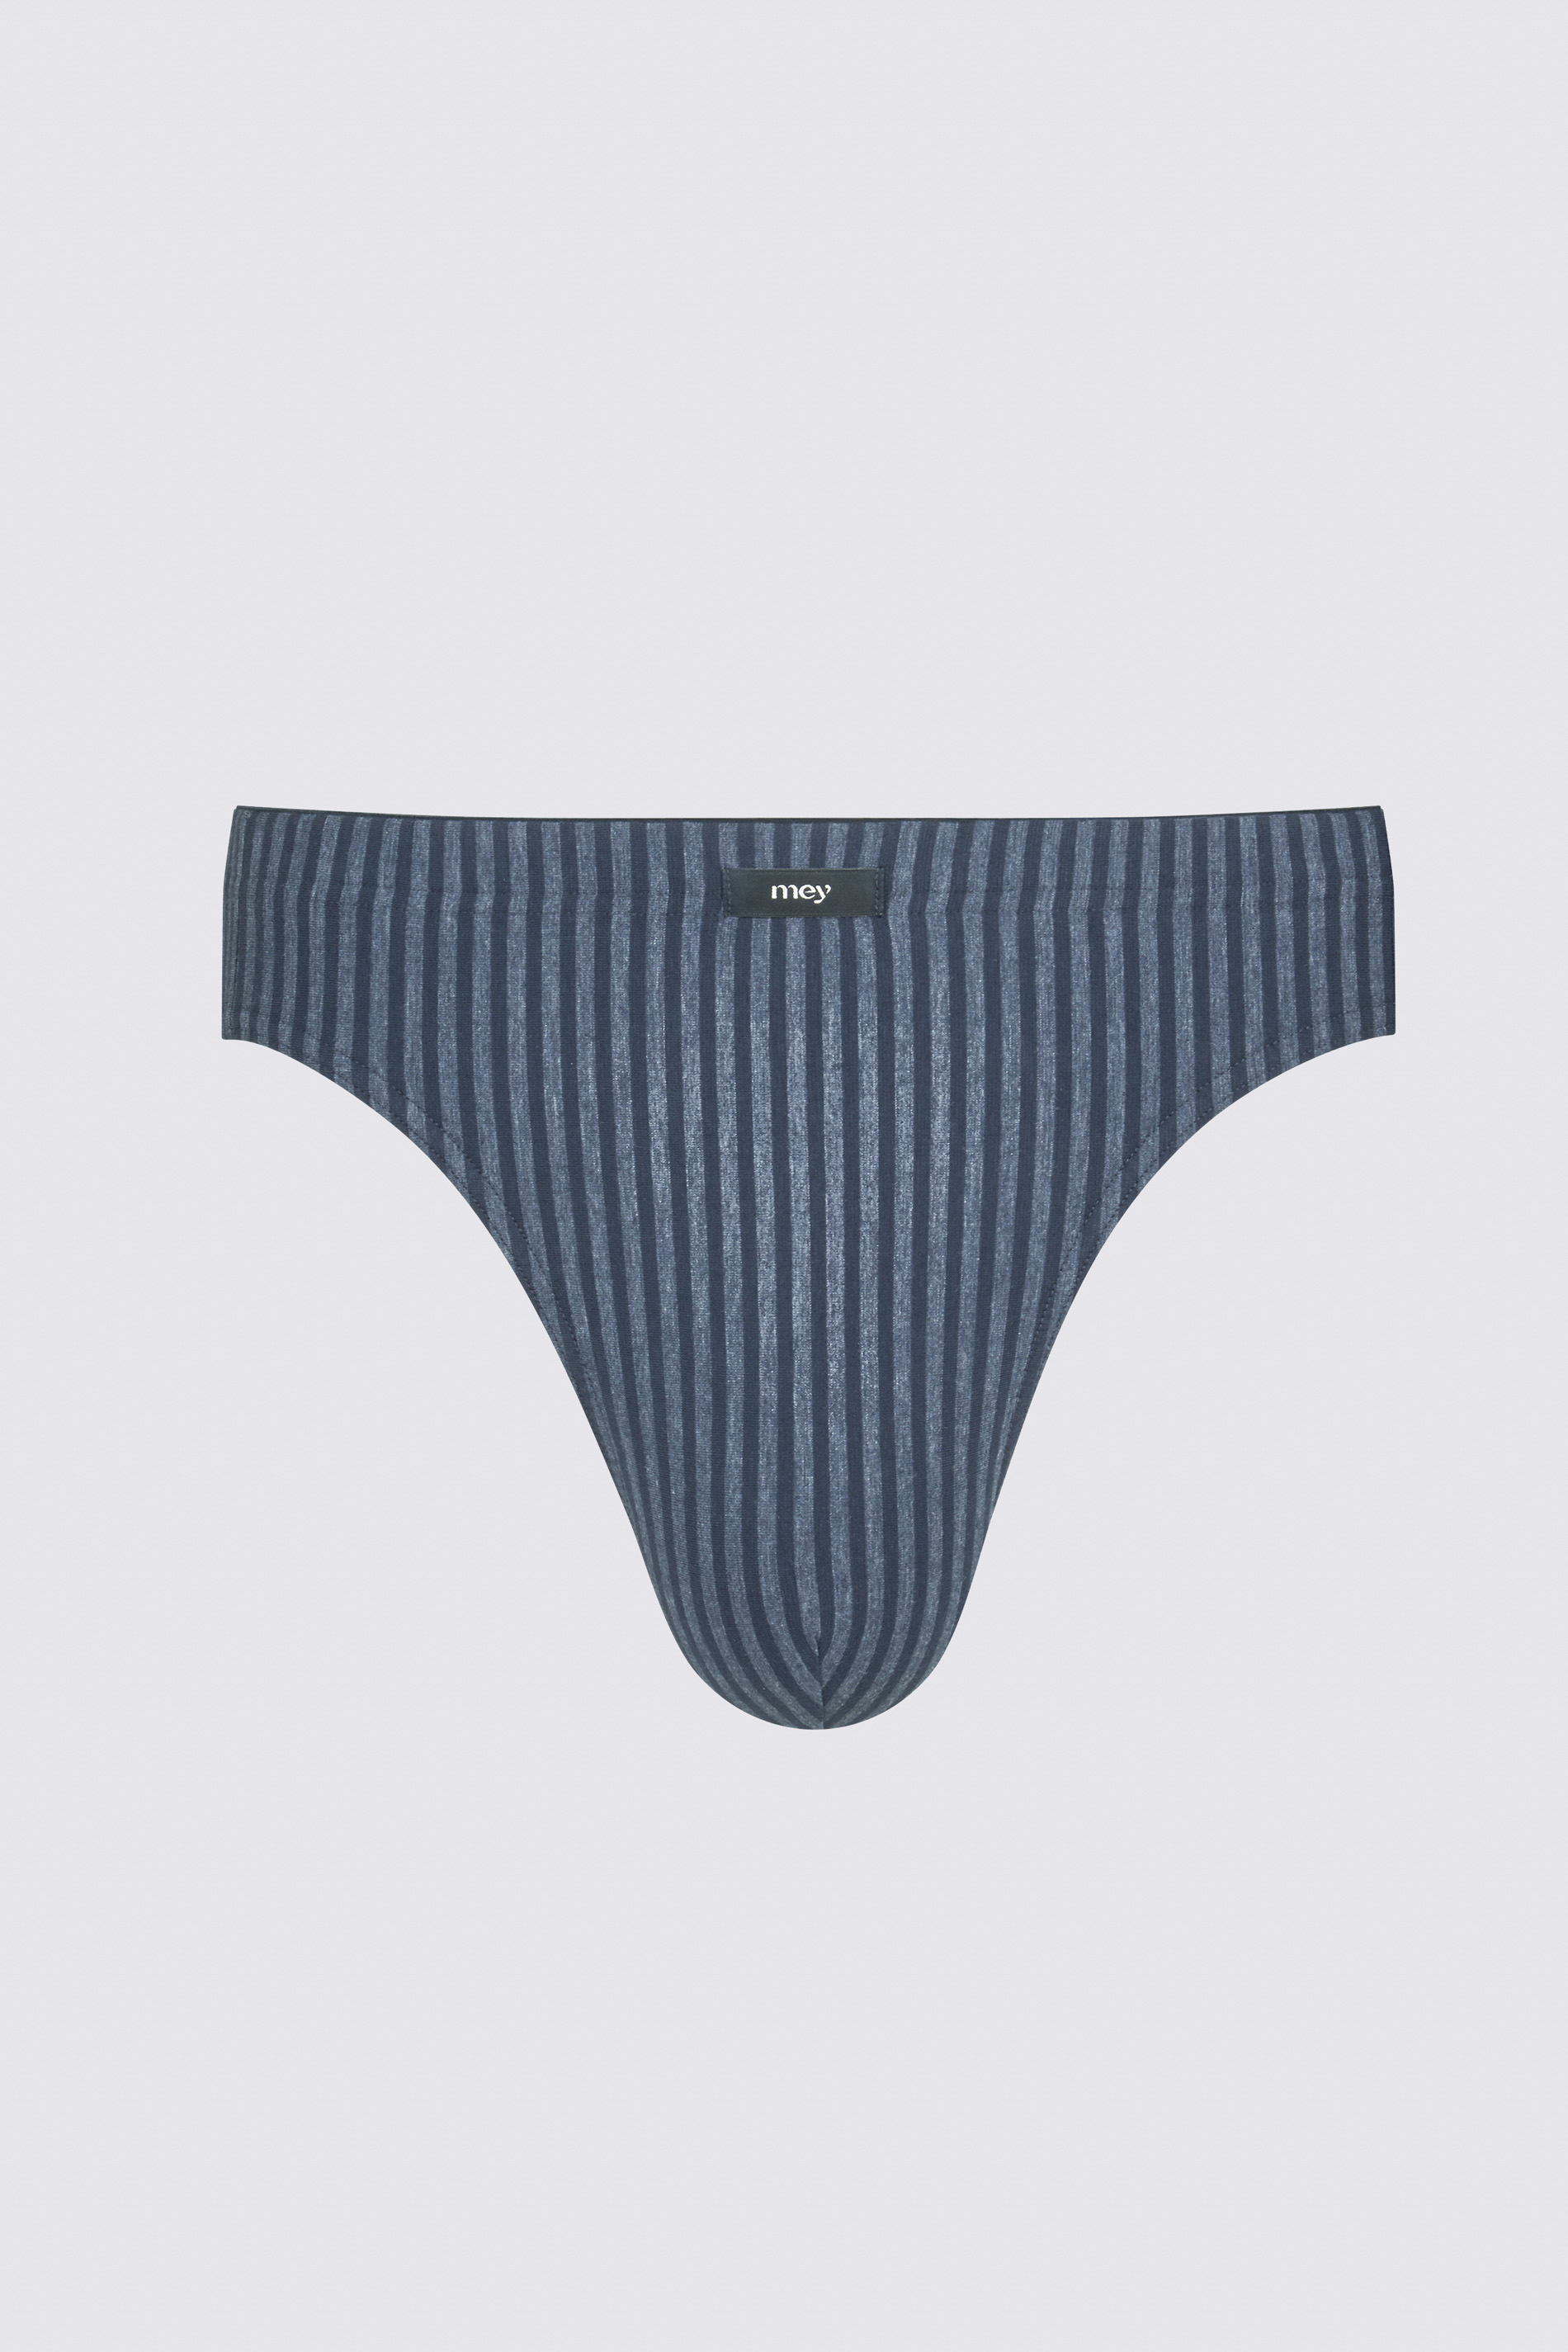 Jazz pants Yacht Blue Serie Tonal Stripes Uitknippen | mey®